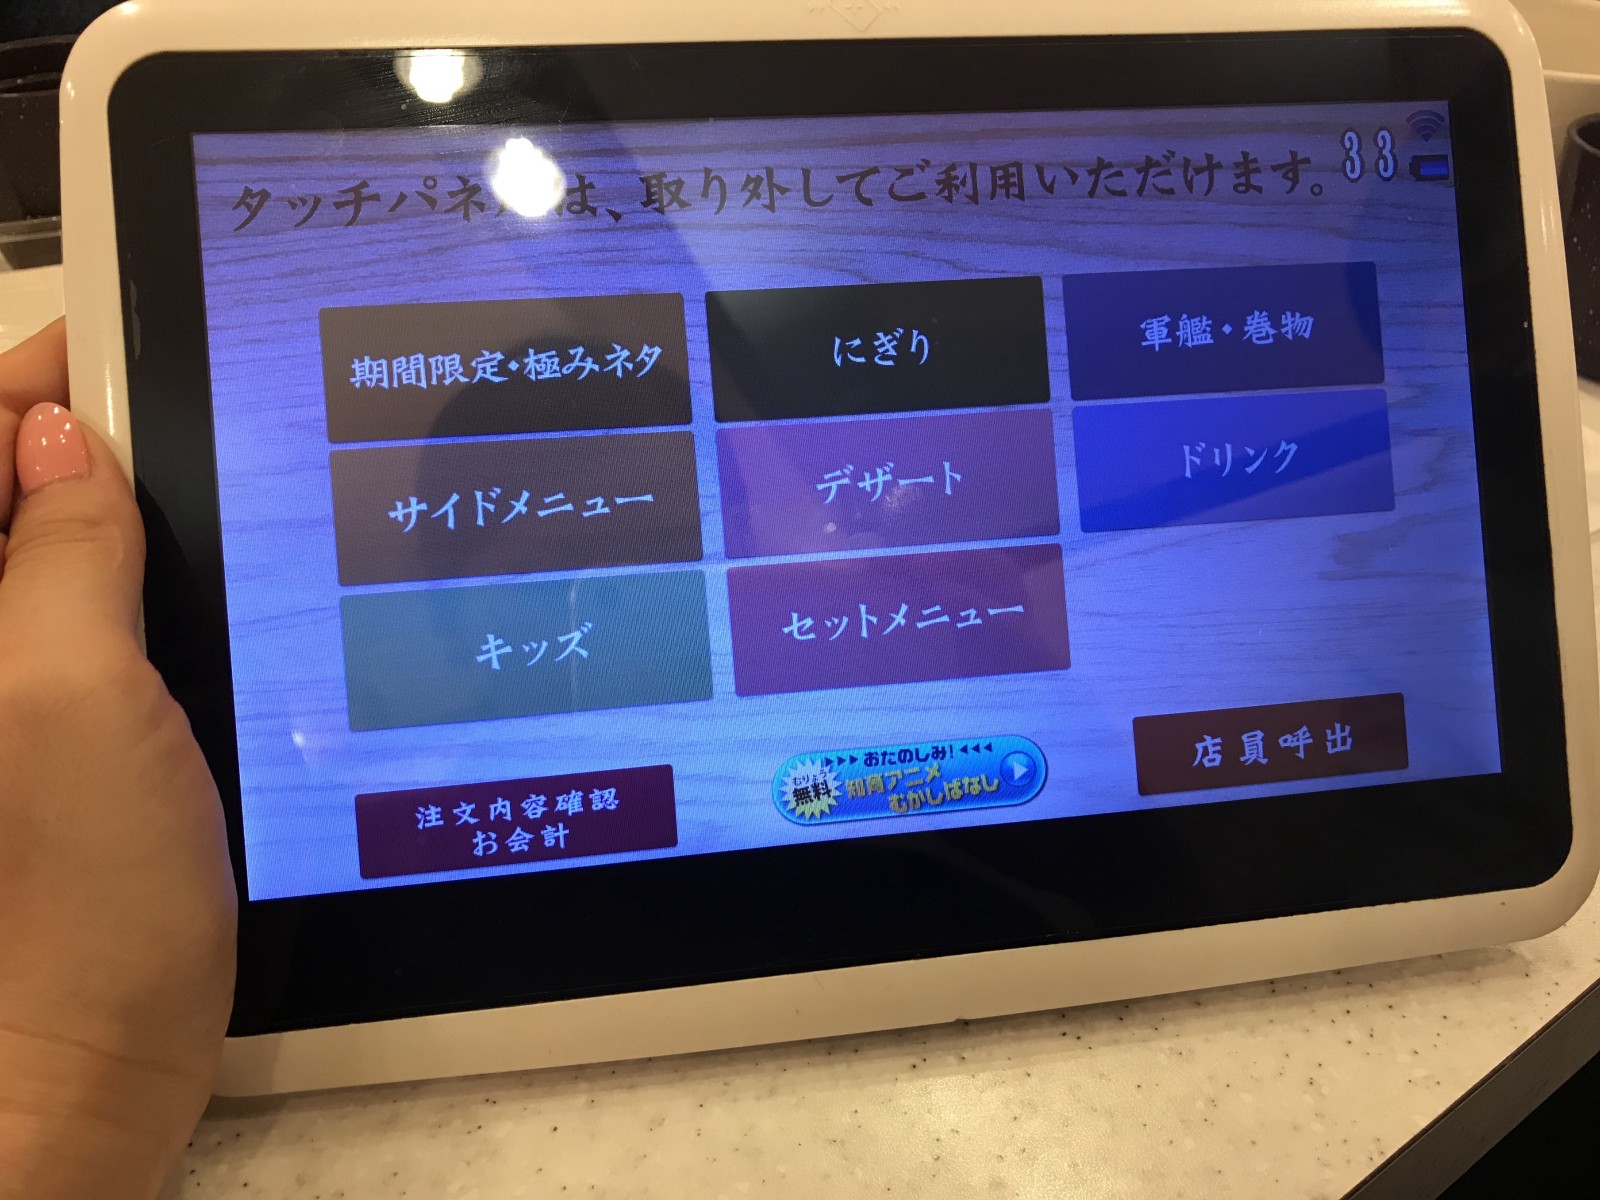 The tablet ordering system at Kappa Sushi